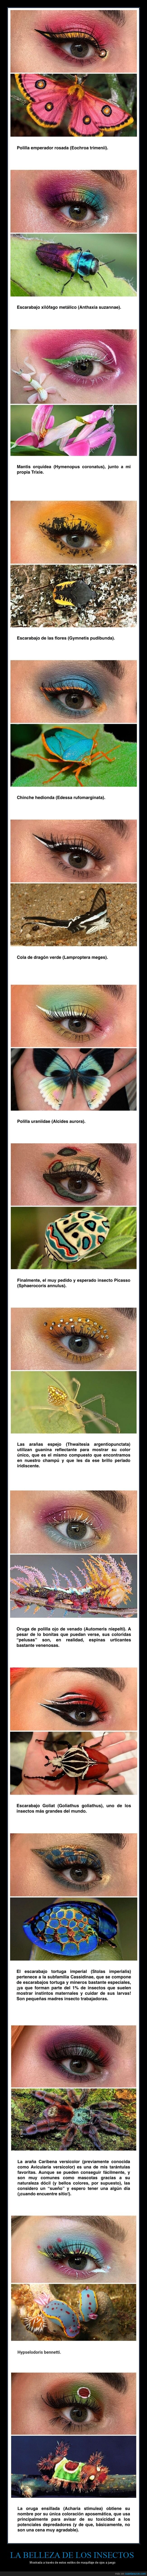 insectos,maquillaje,ojos